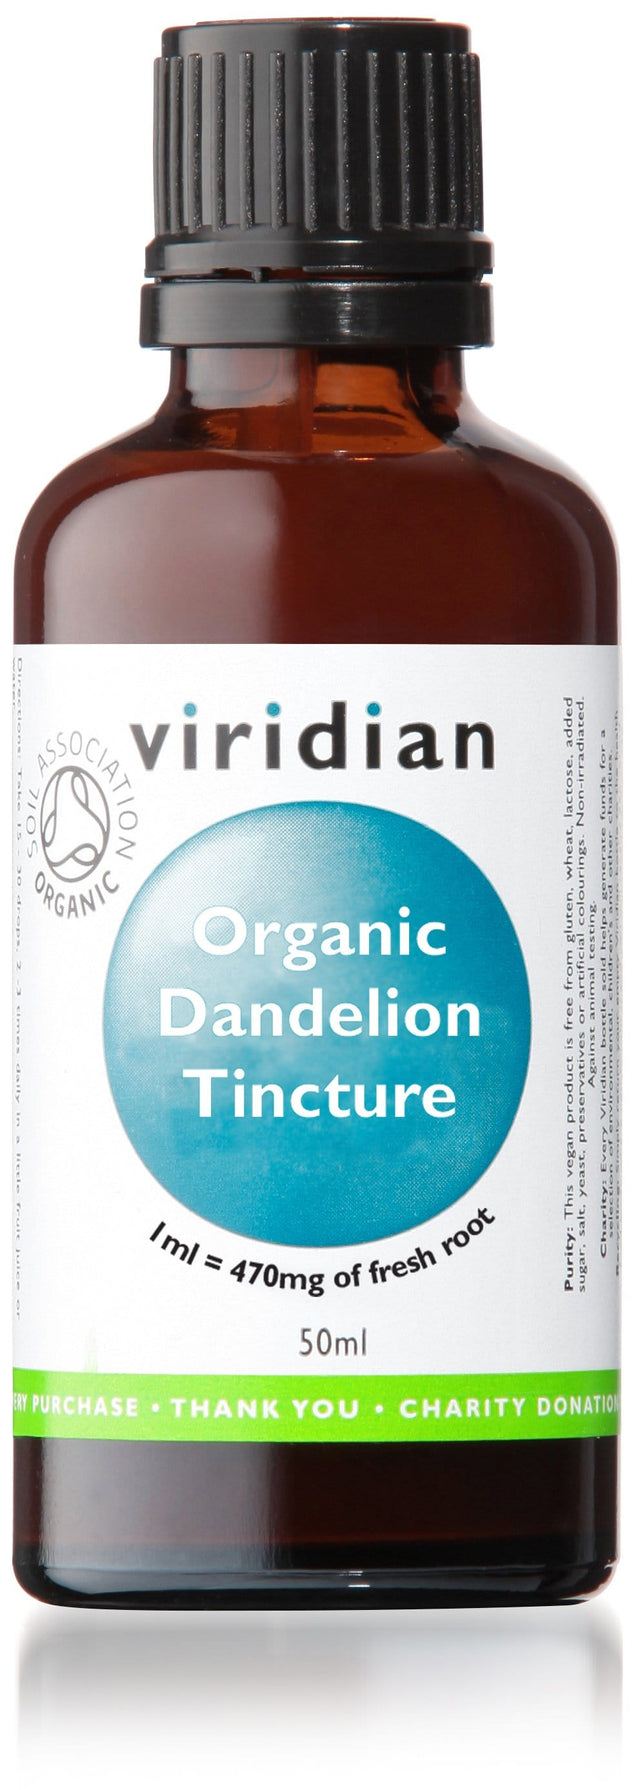 Viridian Organic Dandelion Tincture, 50ml